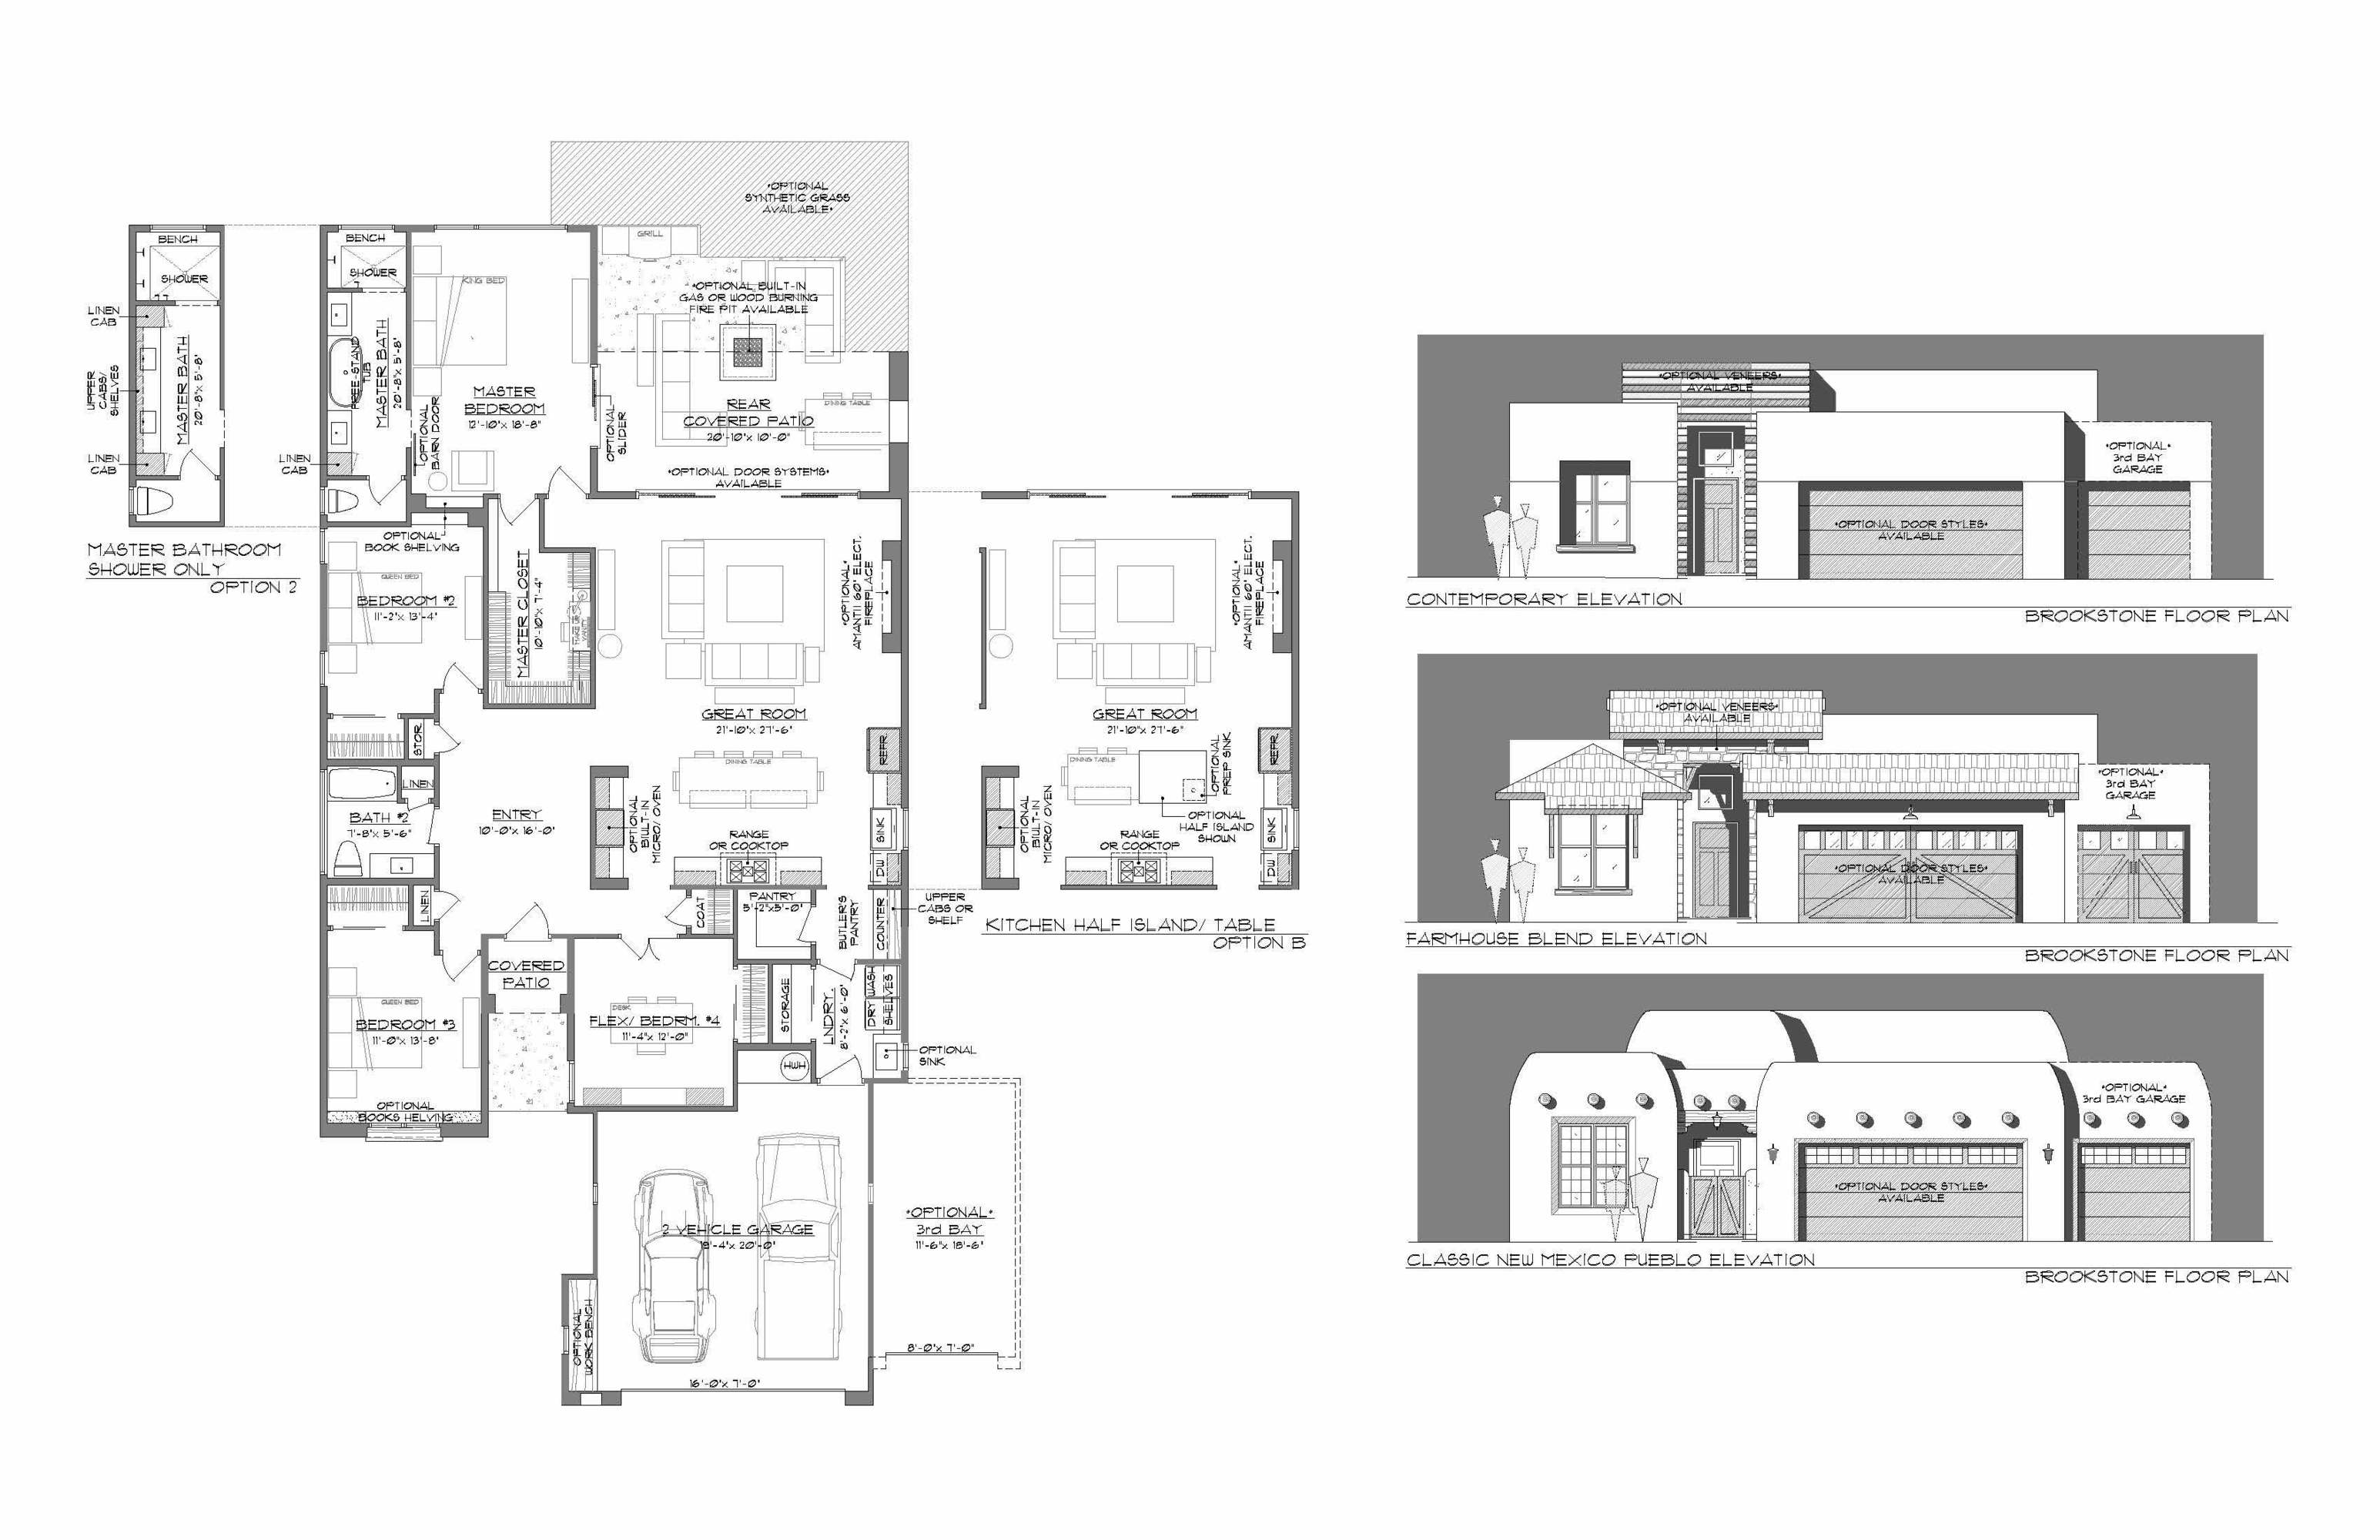 The Brookstone Floor Plan Arista Development, LLC